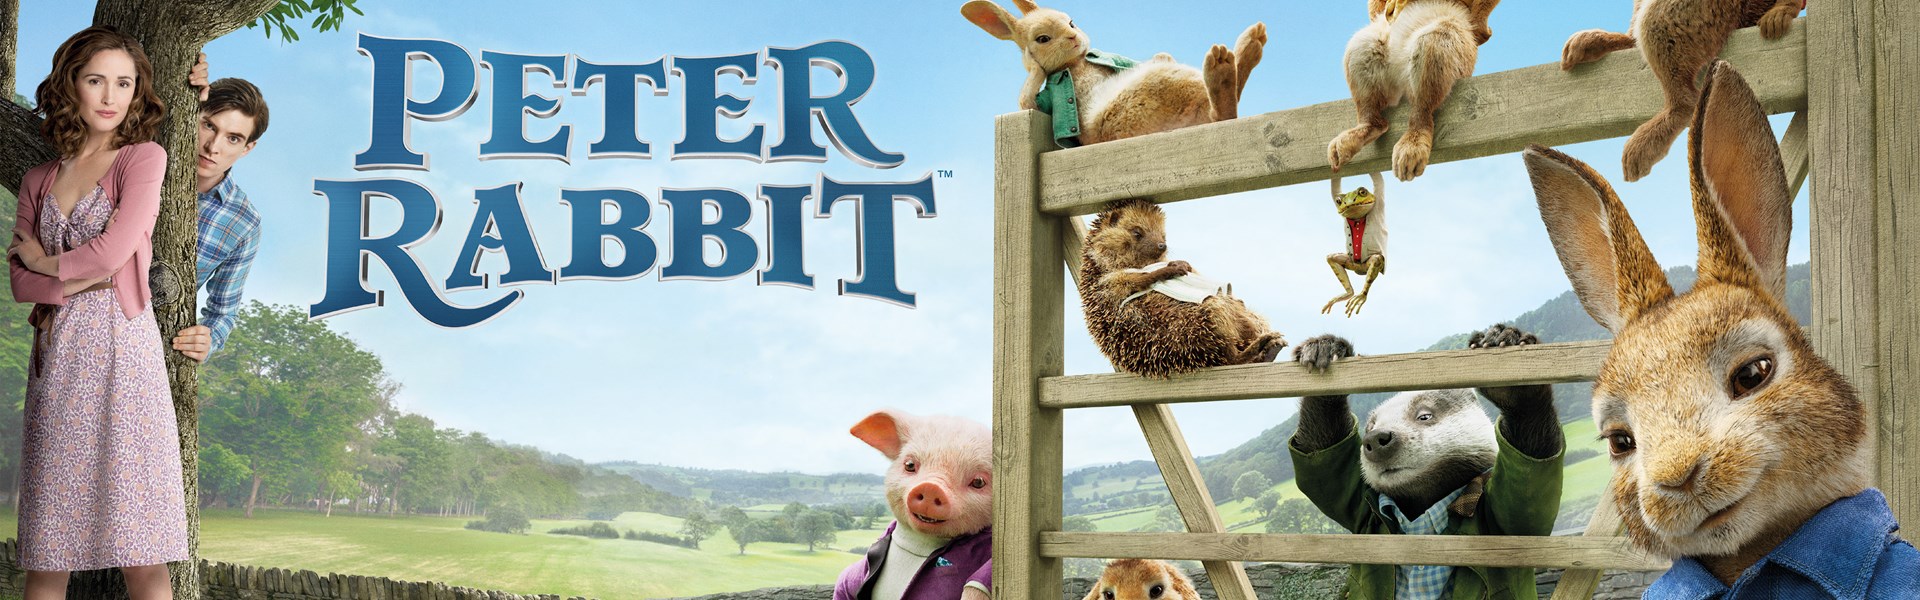 FILM: Peter Rabbit (PG)